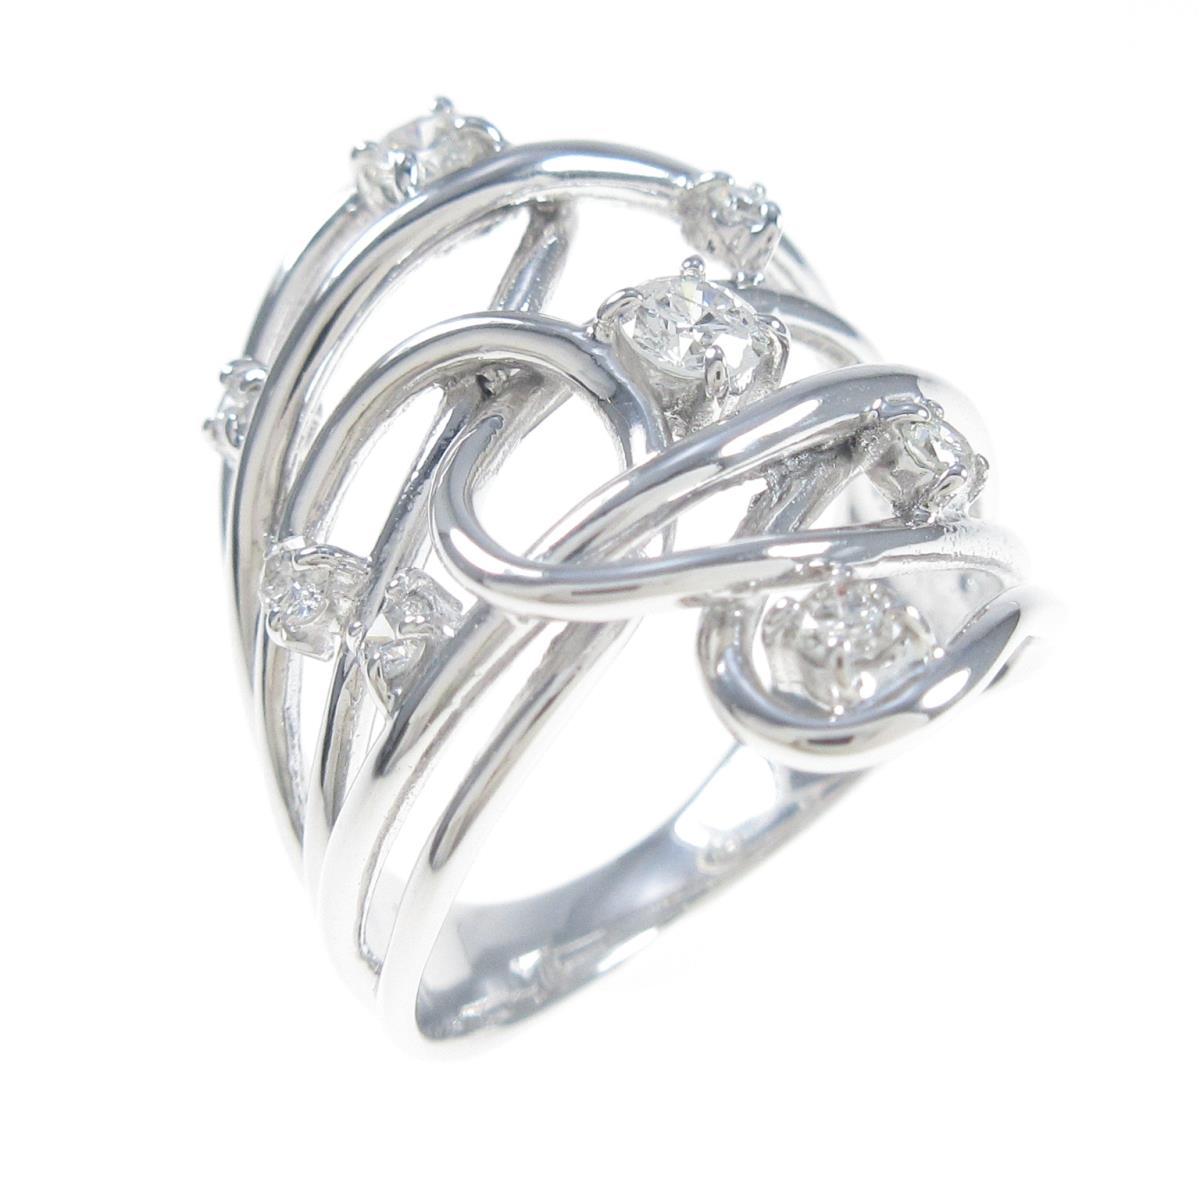 Authentic K18 White Gold Diamond ring #246-000-285-3789 | eBay